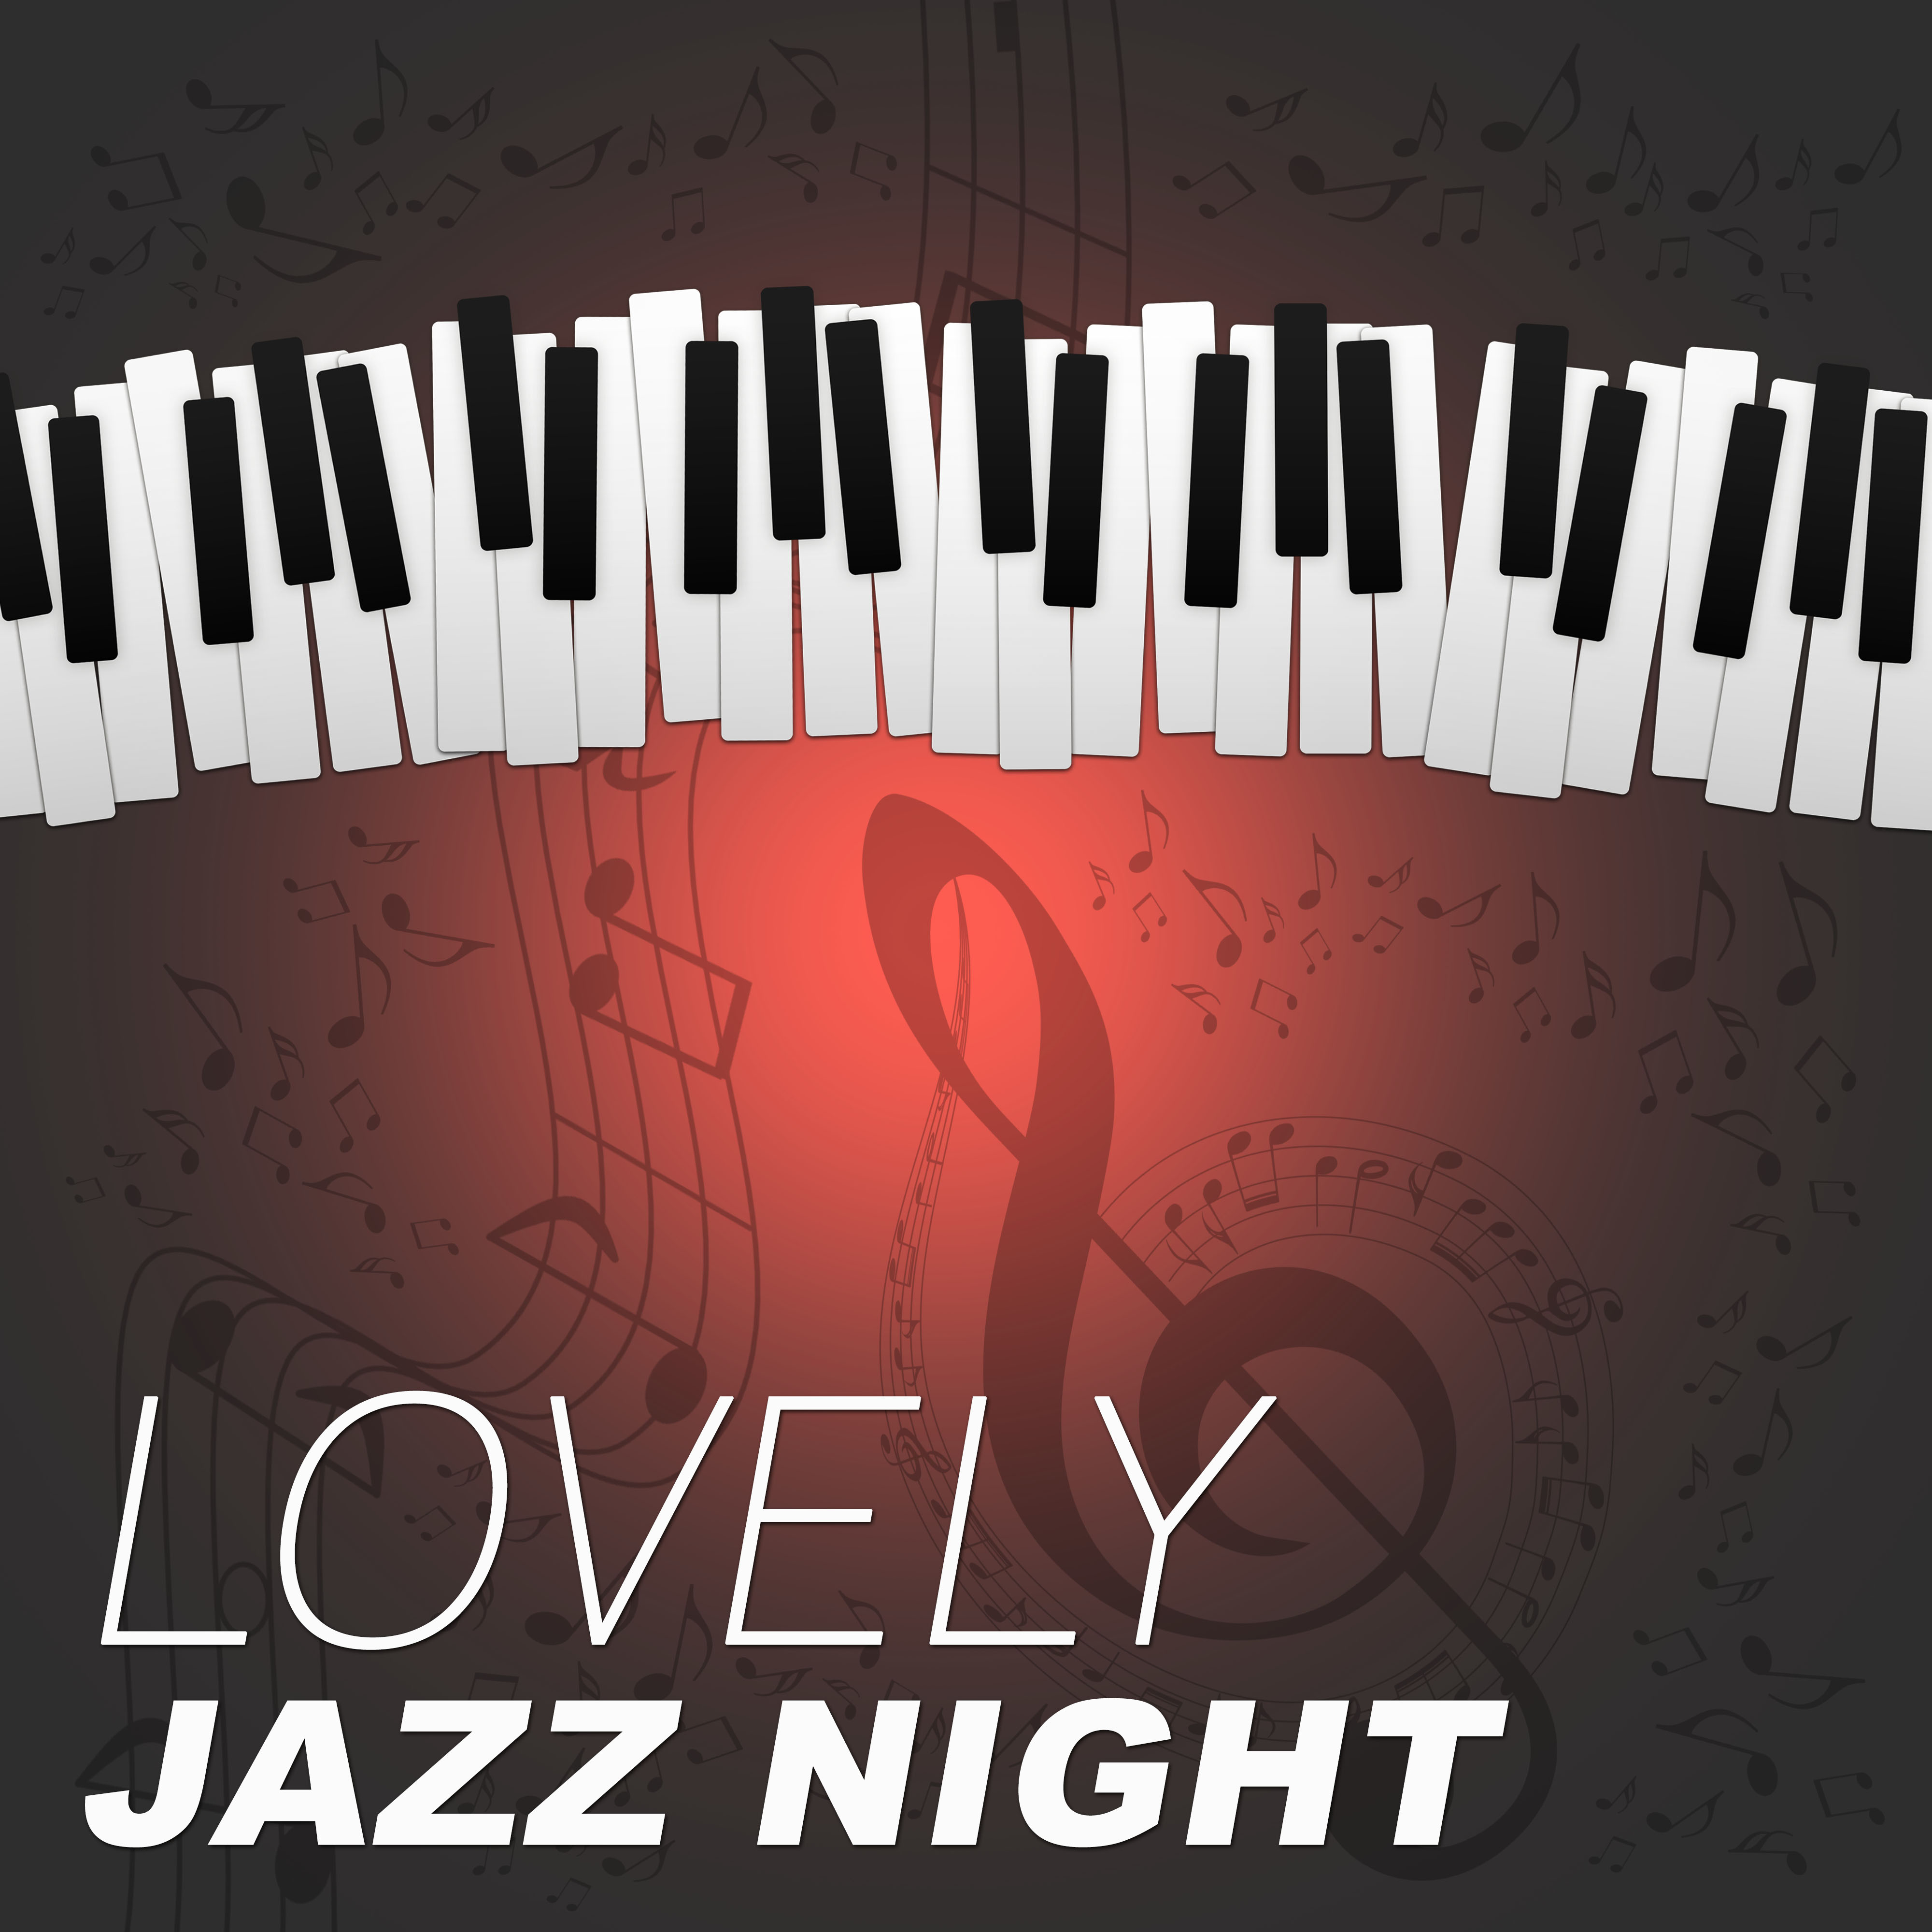 Lovely Jazz Night - Smooth Jazz, Cafe Lounge, Sweet Jazz Night, Piano Background for Relaxation, Beautiful Evening